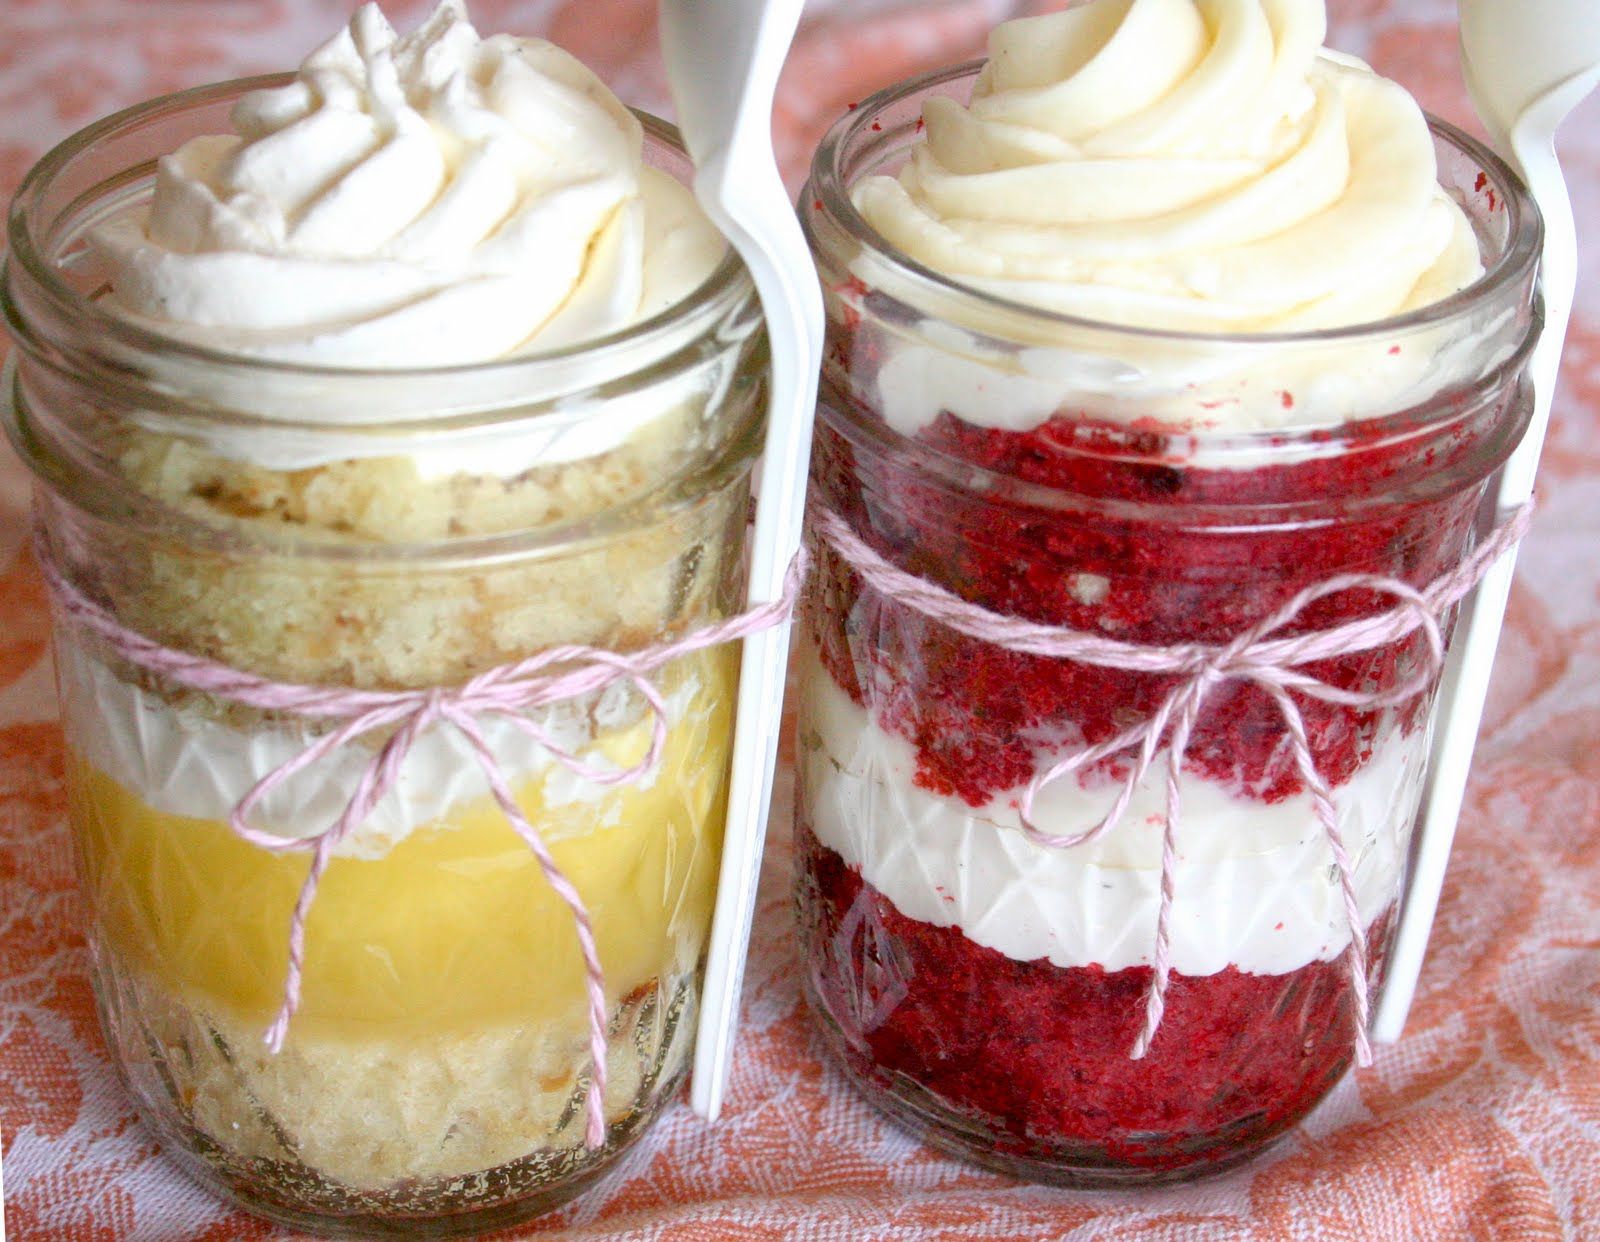 Cupcake in a Jar Ideas